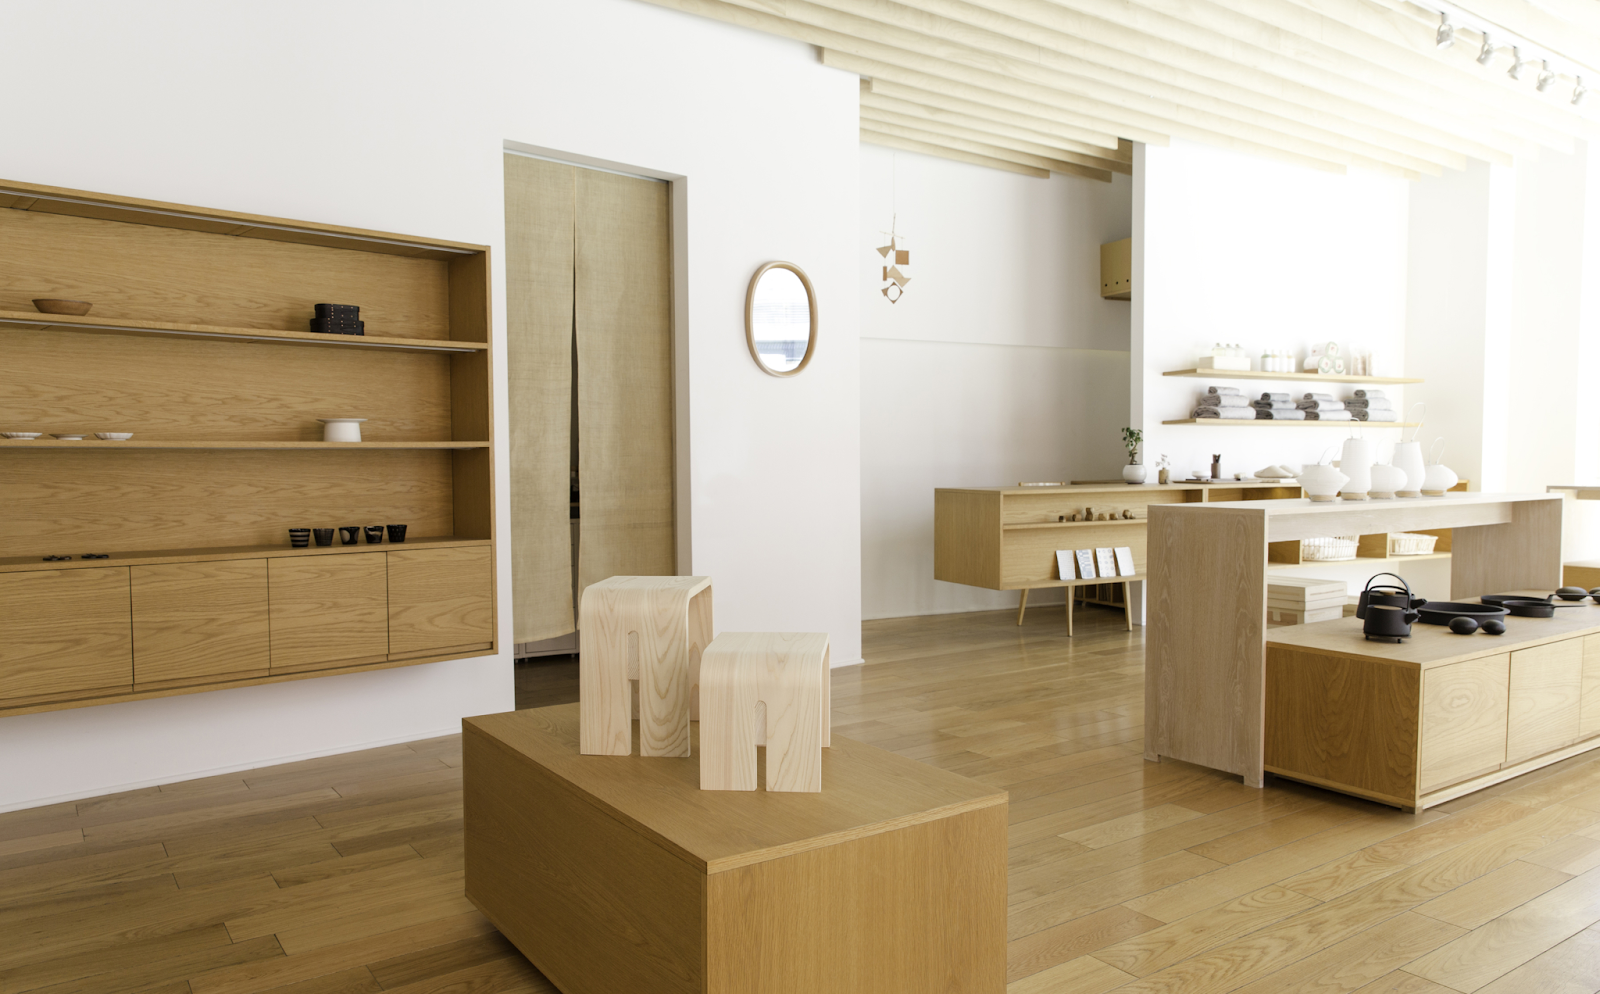 Lifestyle goods shop Nalata Nalata features a minimalist layout that emphasizes its products.